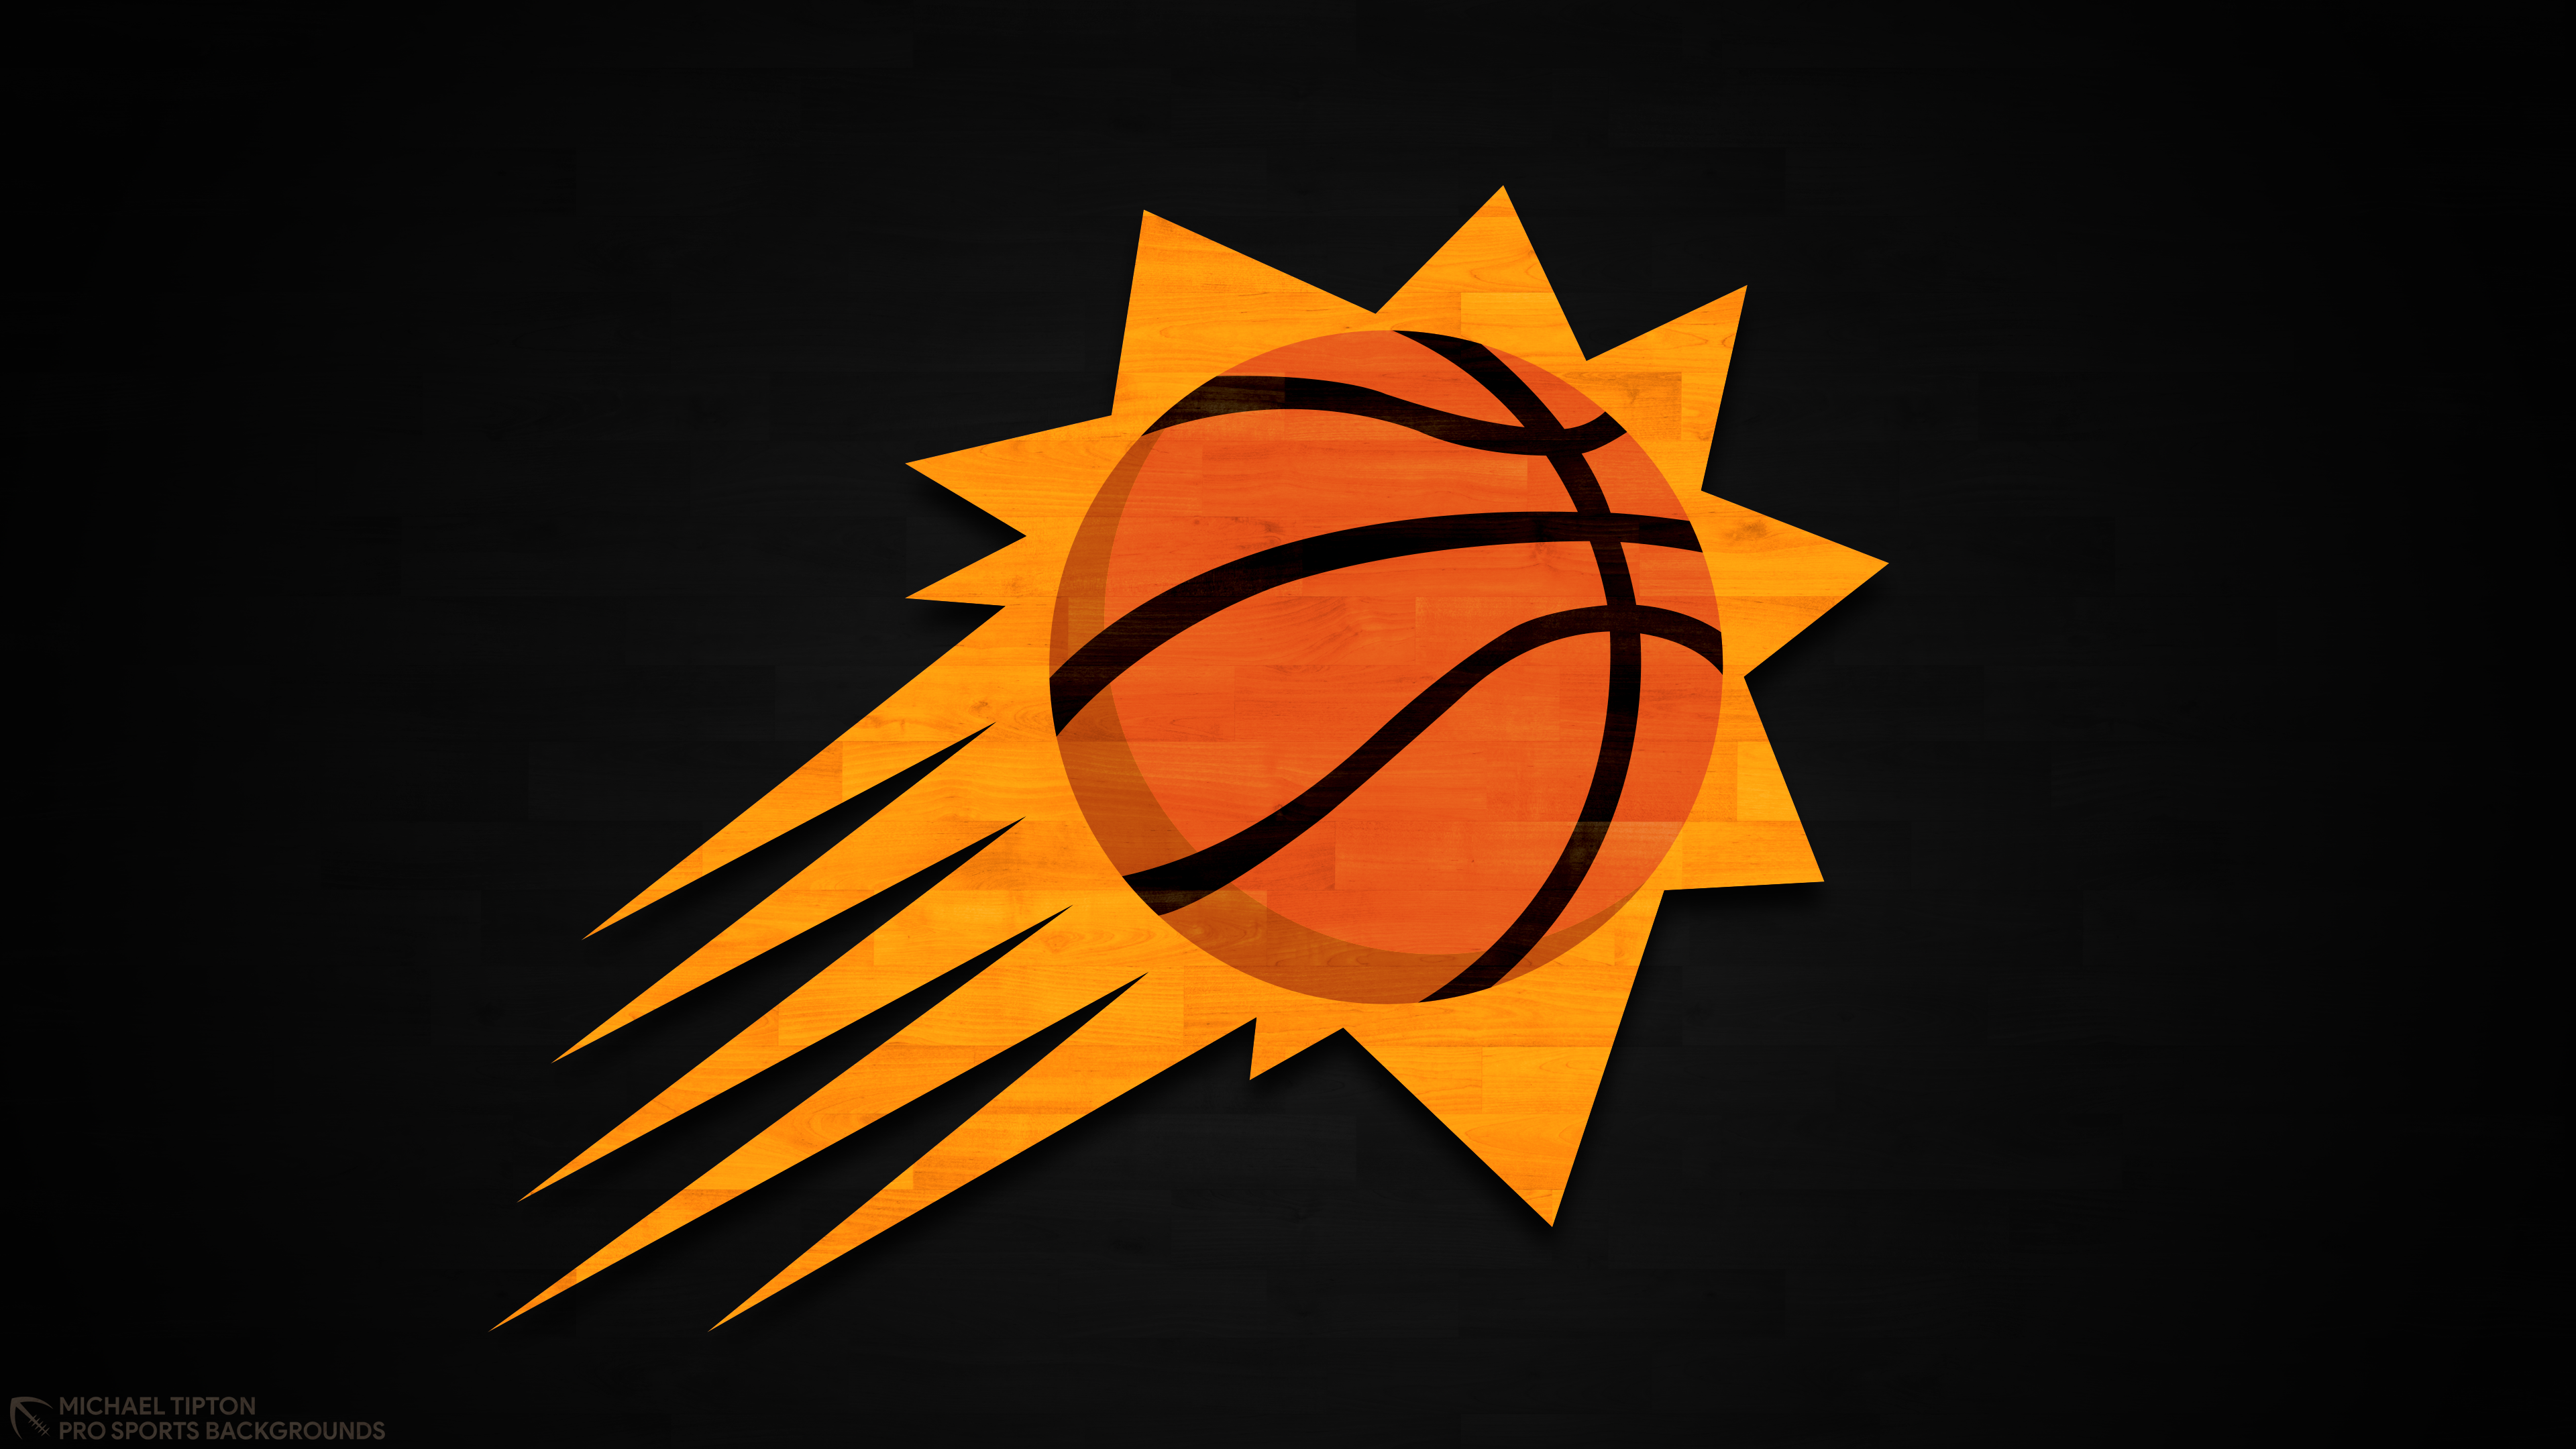 Phoenix Suns wallpaper by Quarterpound11  Download on ZEDGE  6c14